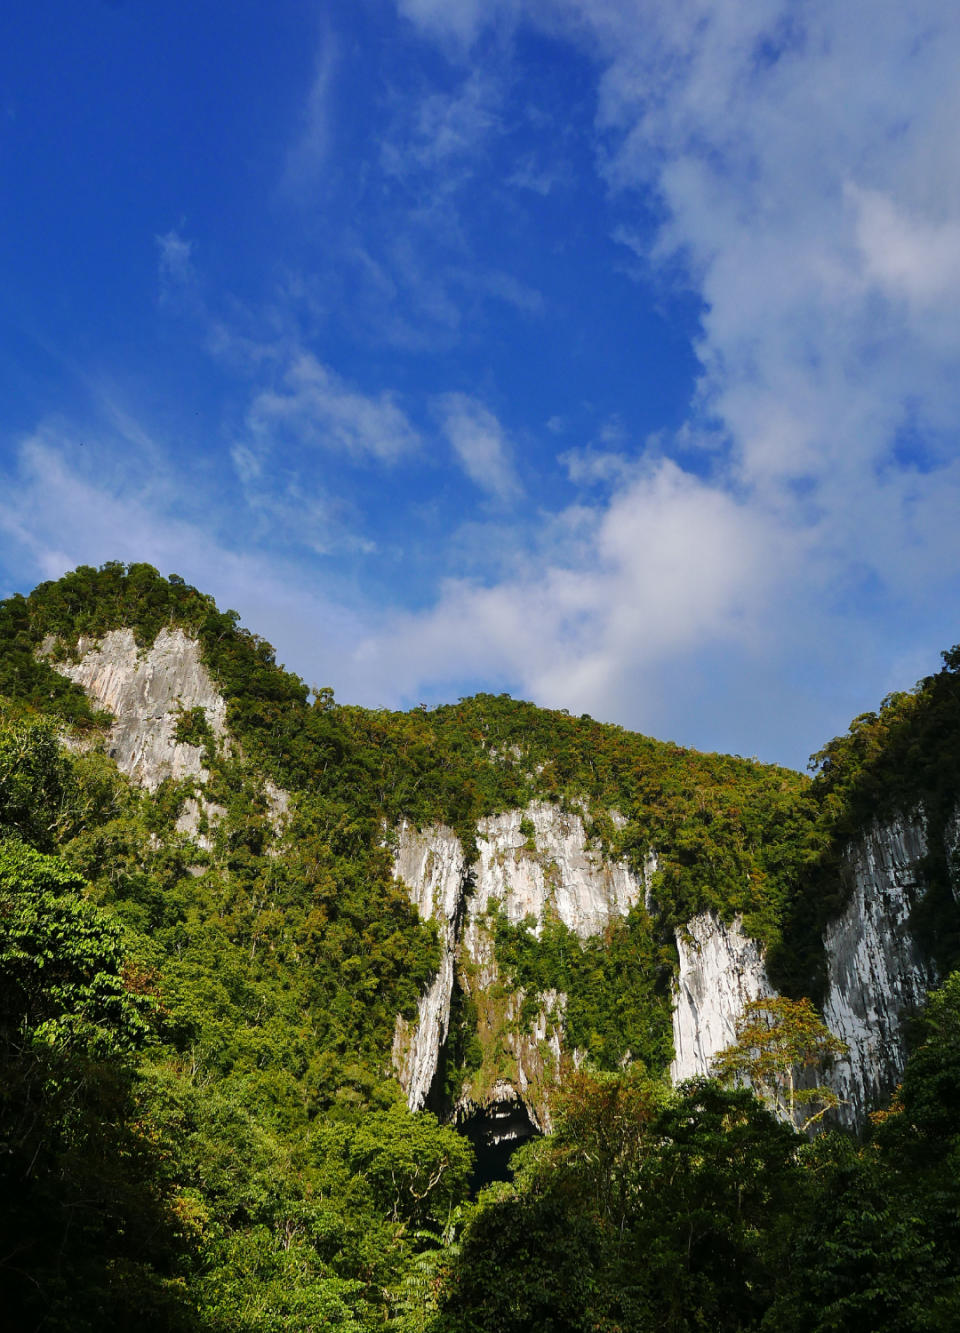 Gunung Mulu National Park, Malaysia